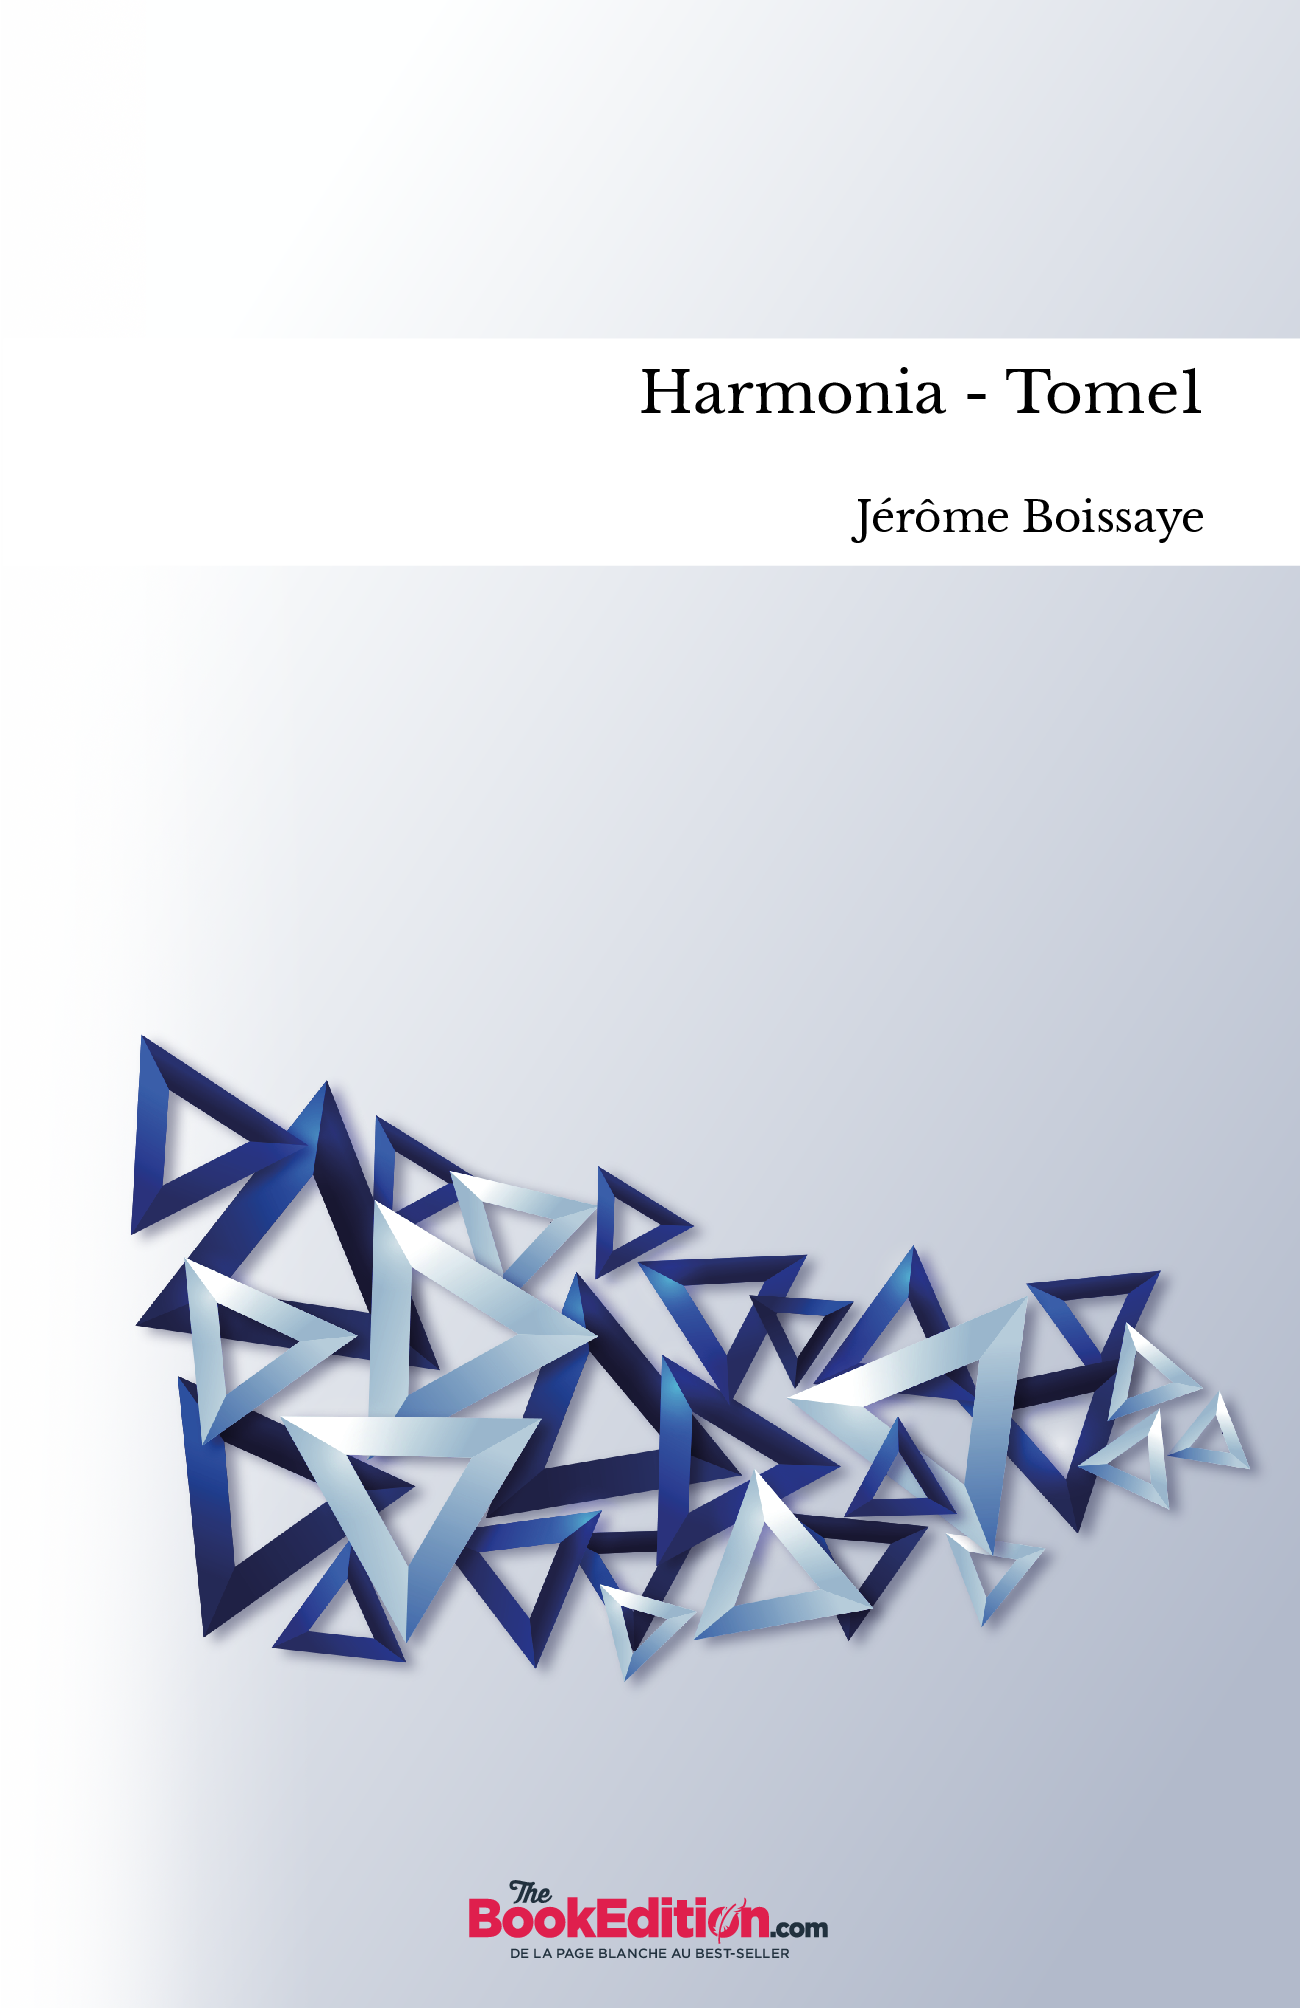 Harmonia - Tome1